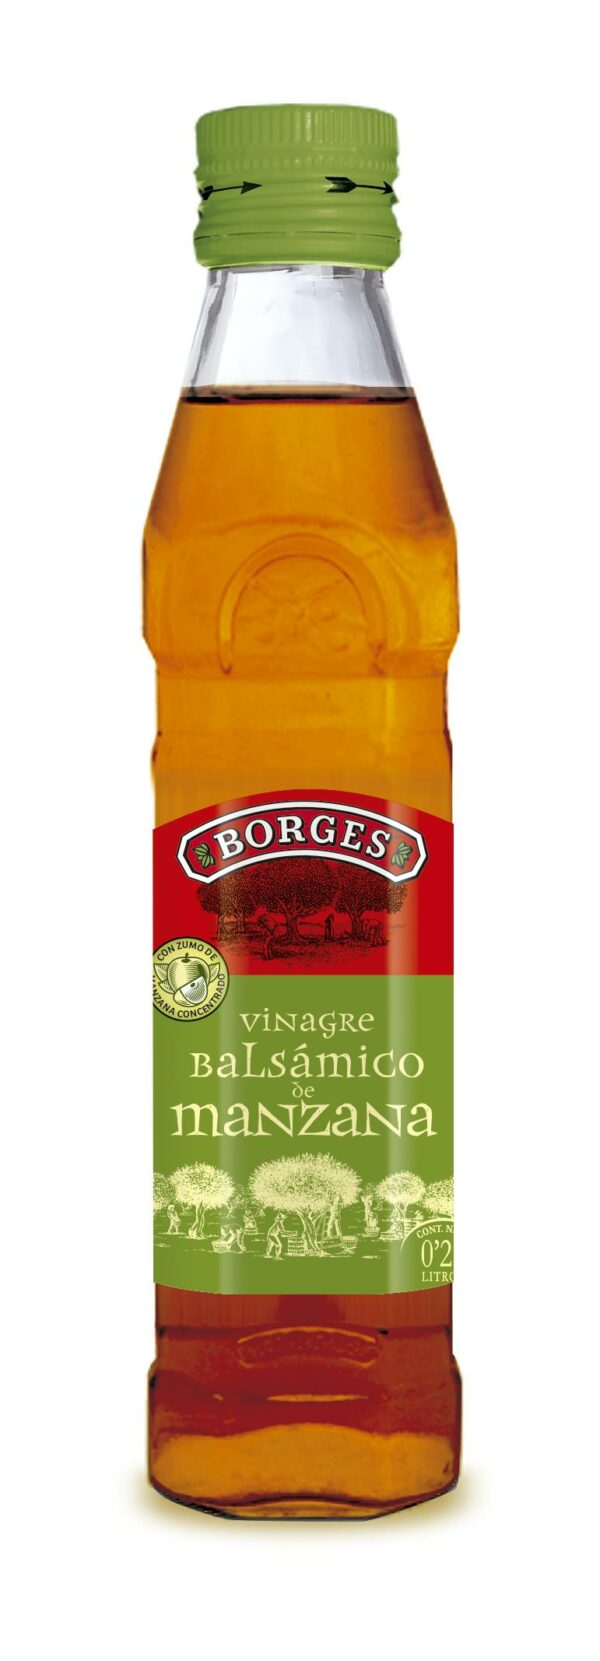 BORGES VINAGRE BALSAMIC 25CL